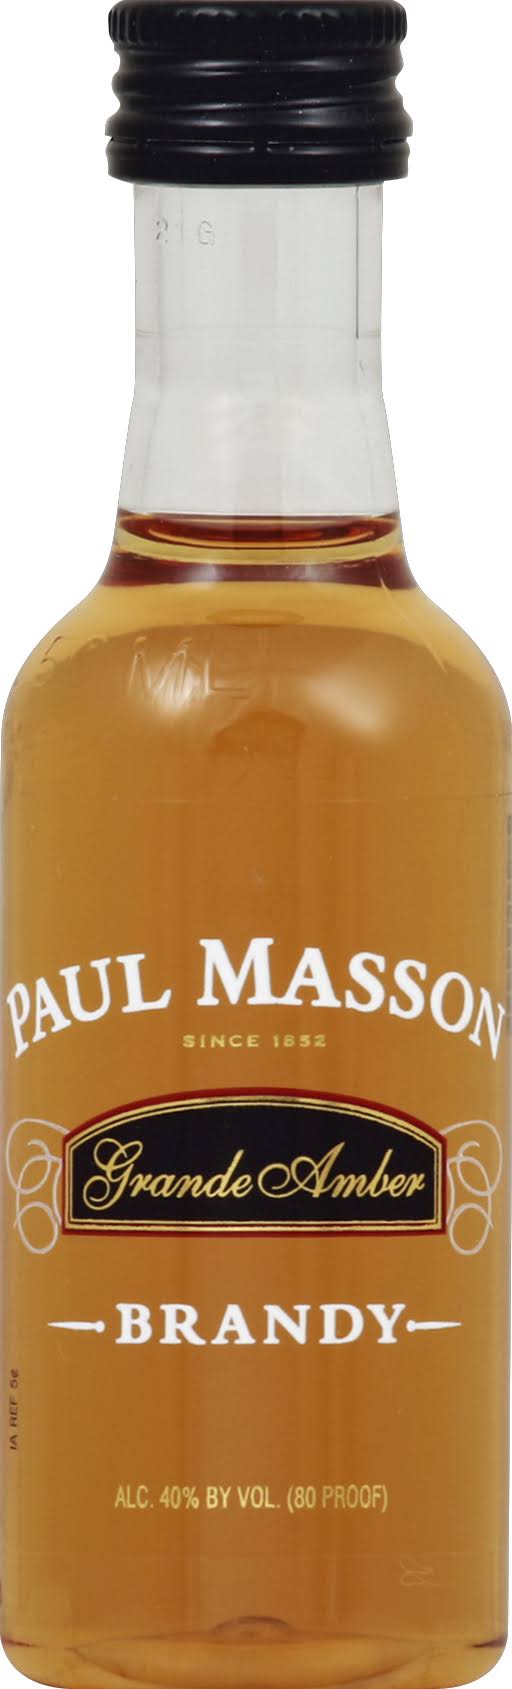 Paul Masson Brandy Grande Amber - 50 ml